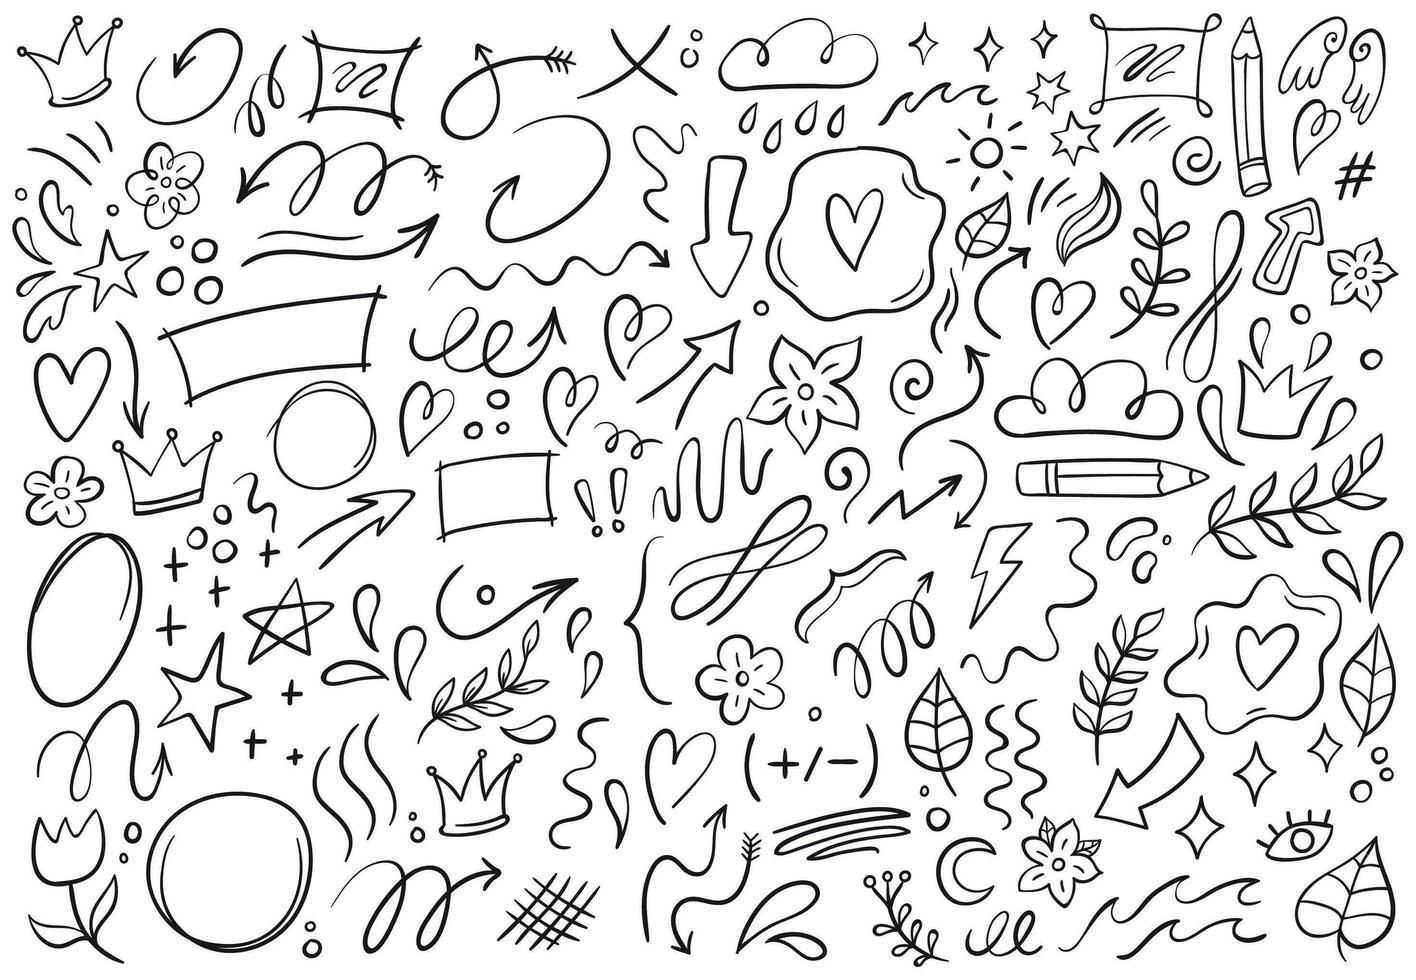 Decorative doodles. Hand drawn pointing arrow, outline shapes and doodle frames vector illustration set